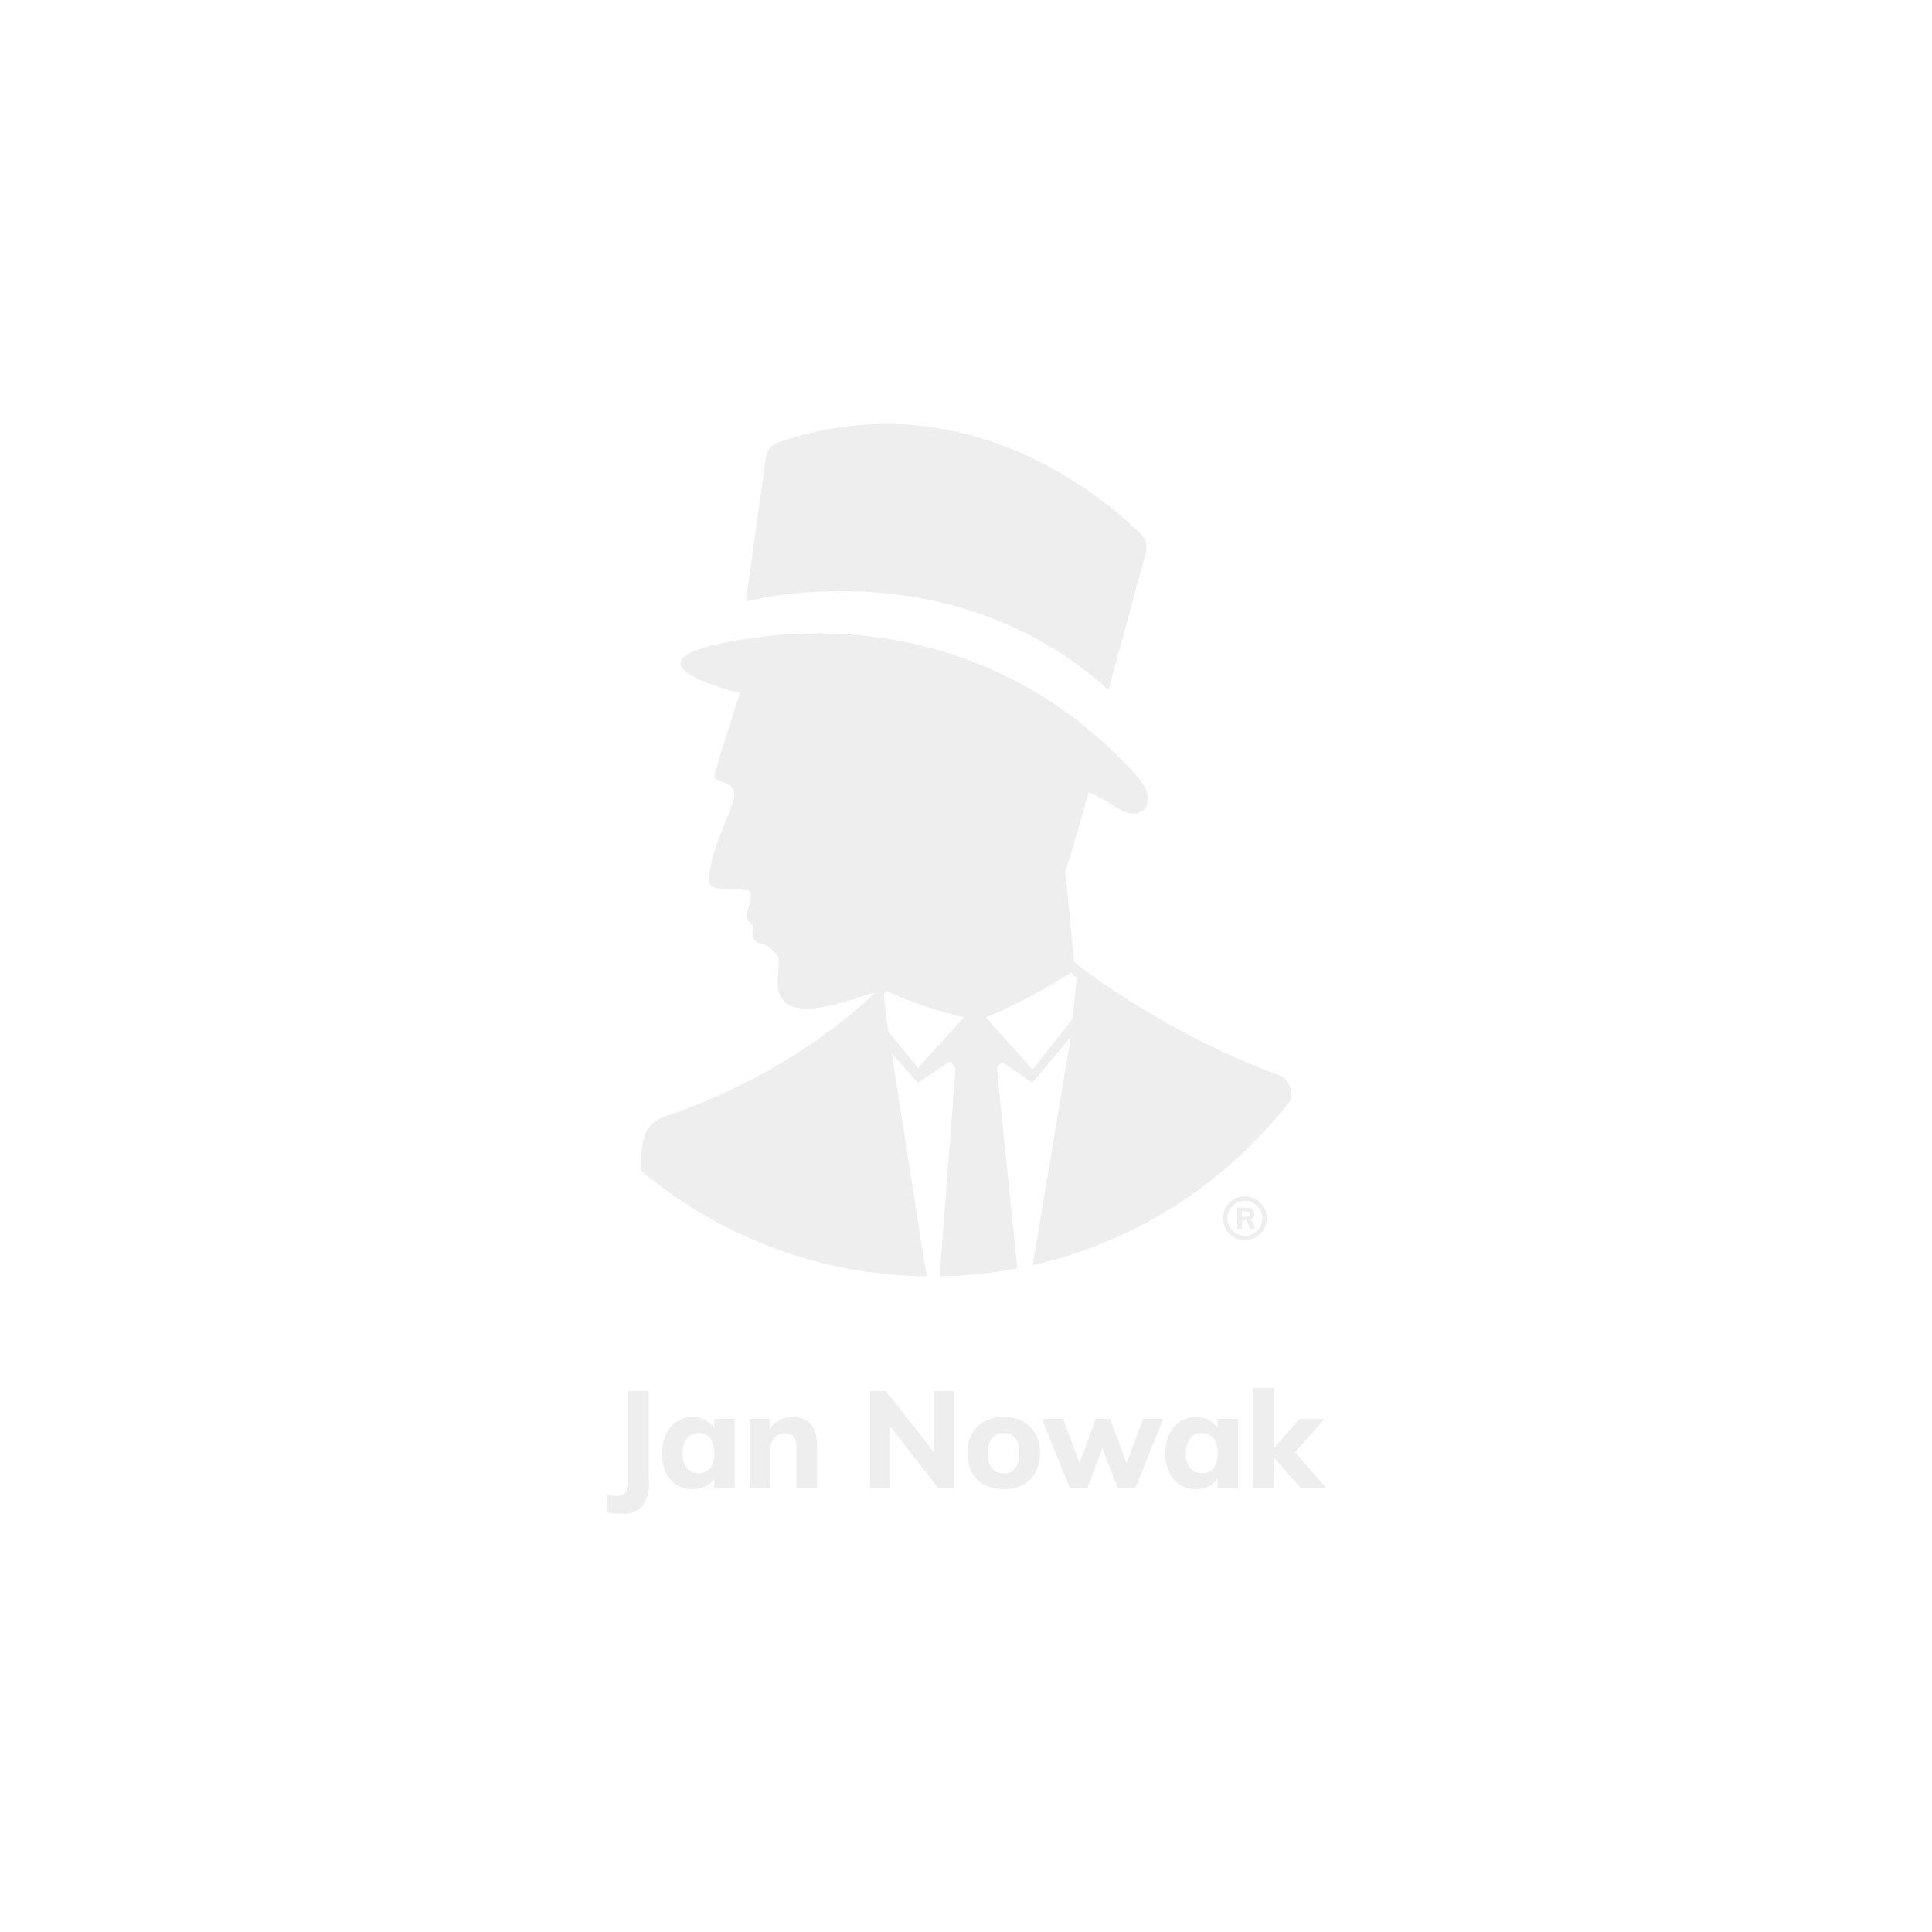 JAN NOWAK model KEVIN 900x1400x400 biurowa szafa metalowa na akta: szara